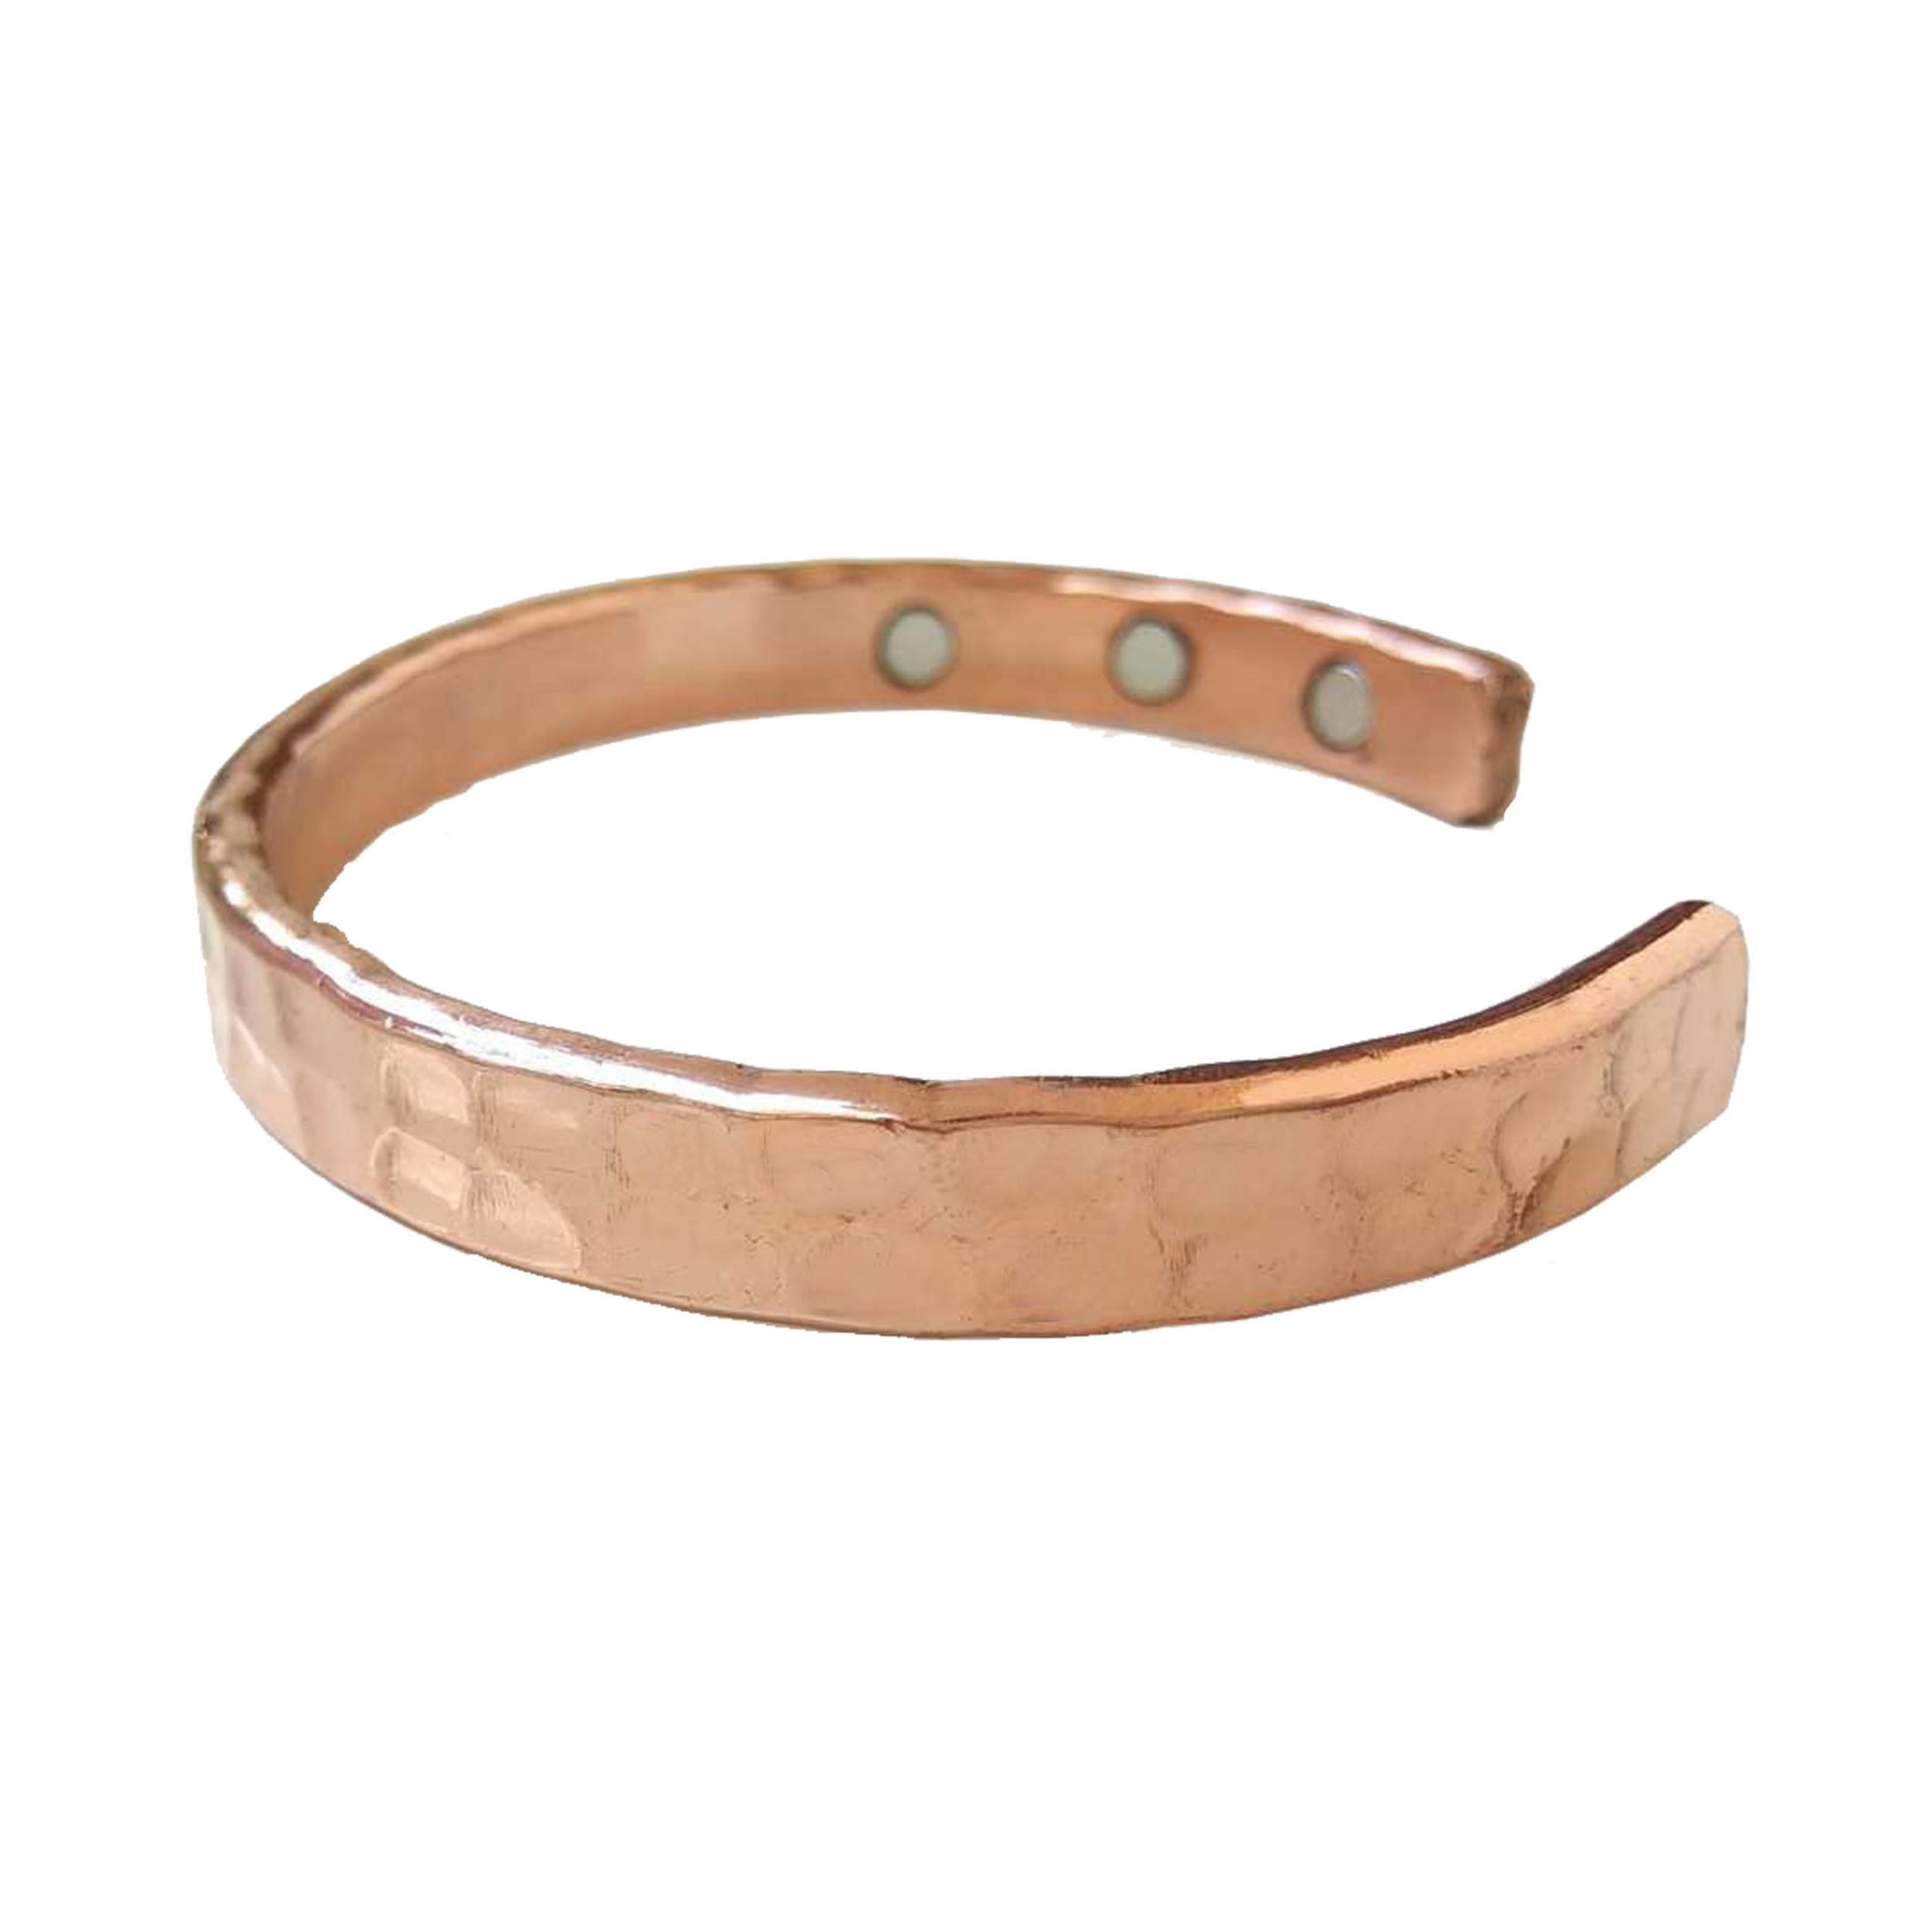 Copper bracelet with magnet